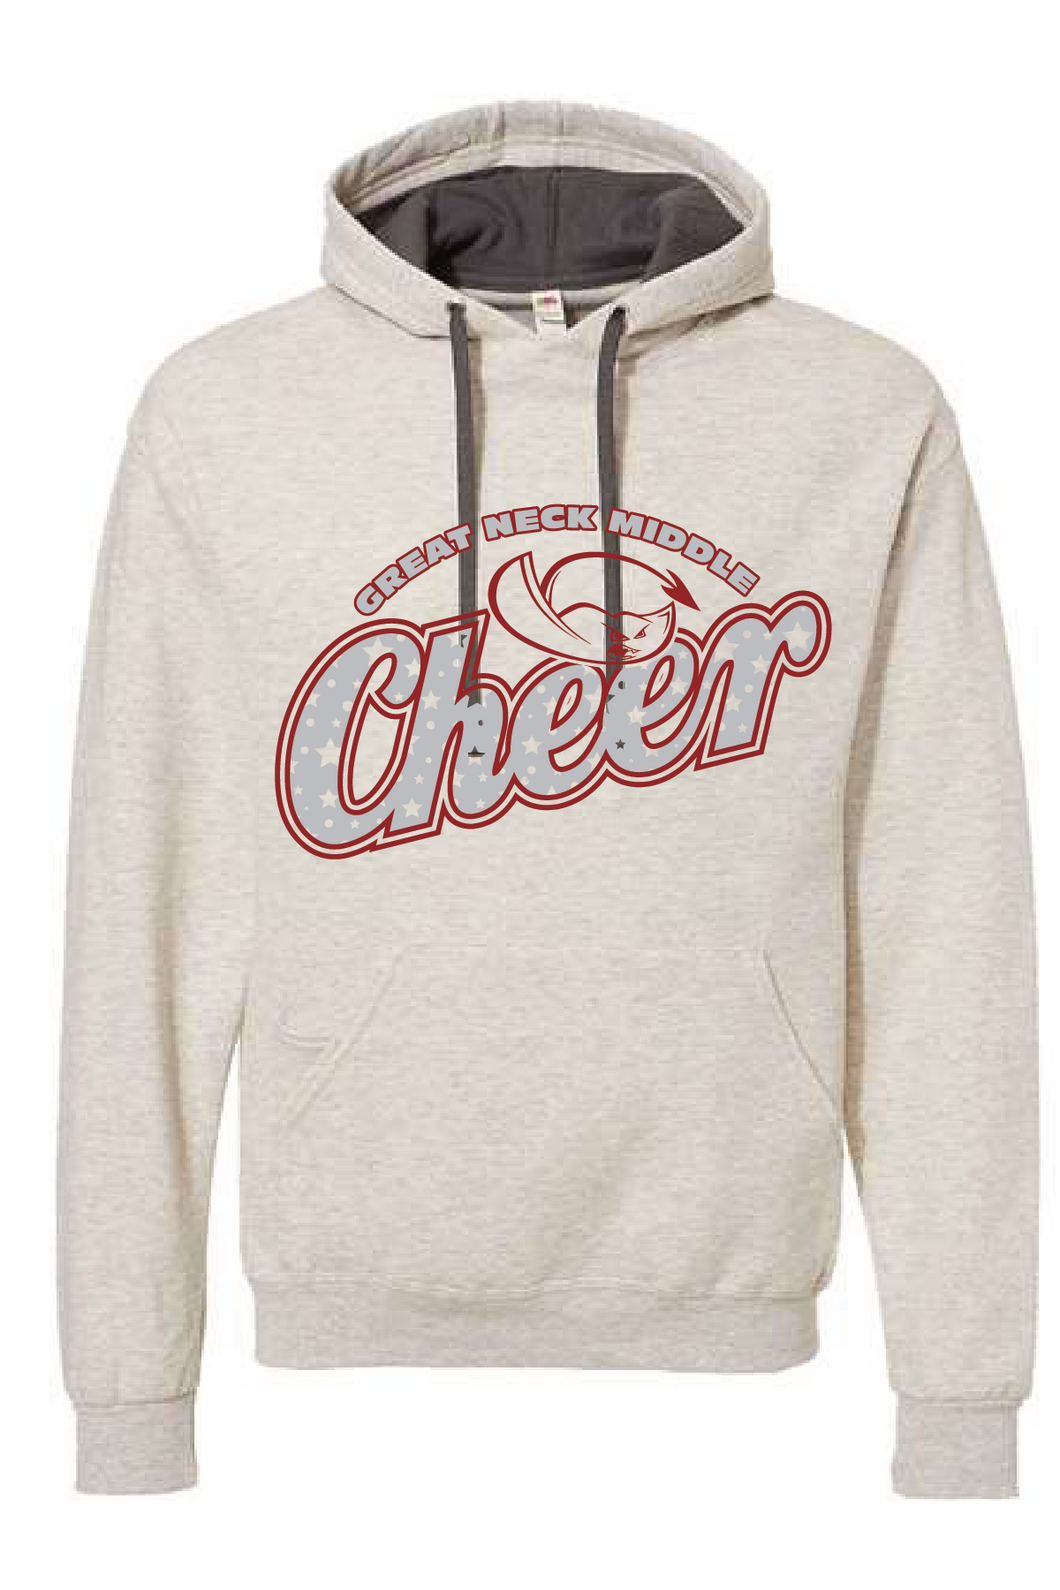 Sofspun Hooded Sweatshirt / Oatmeal Heather / Great Neck Middle School Cheer